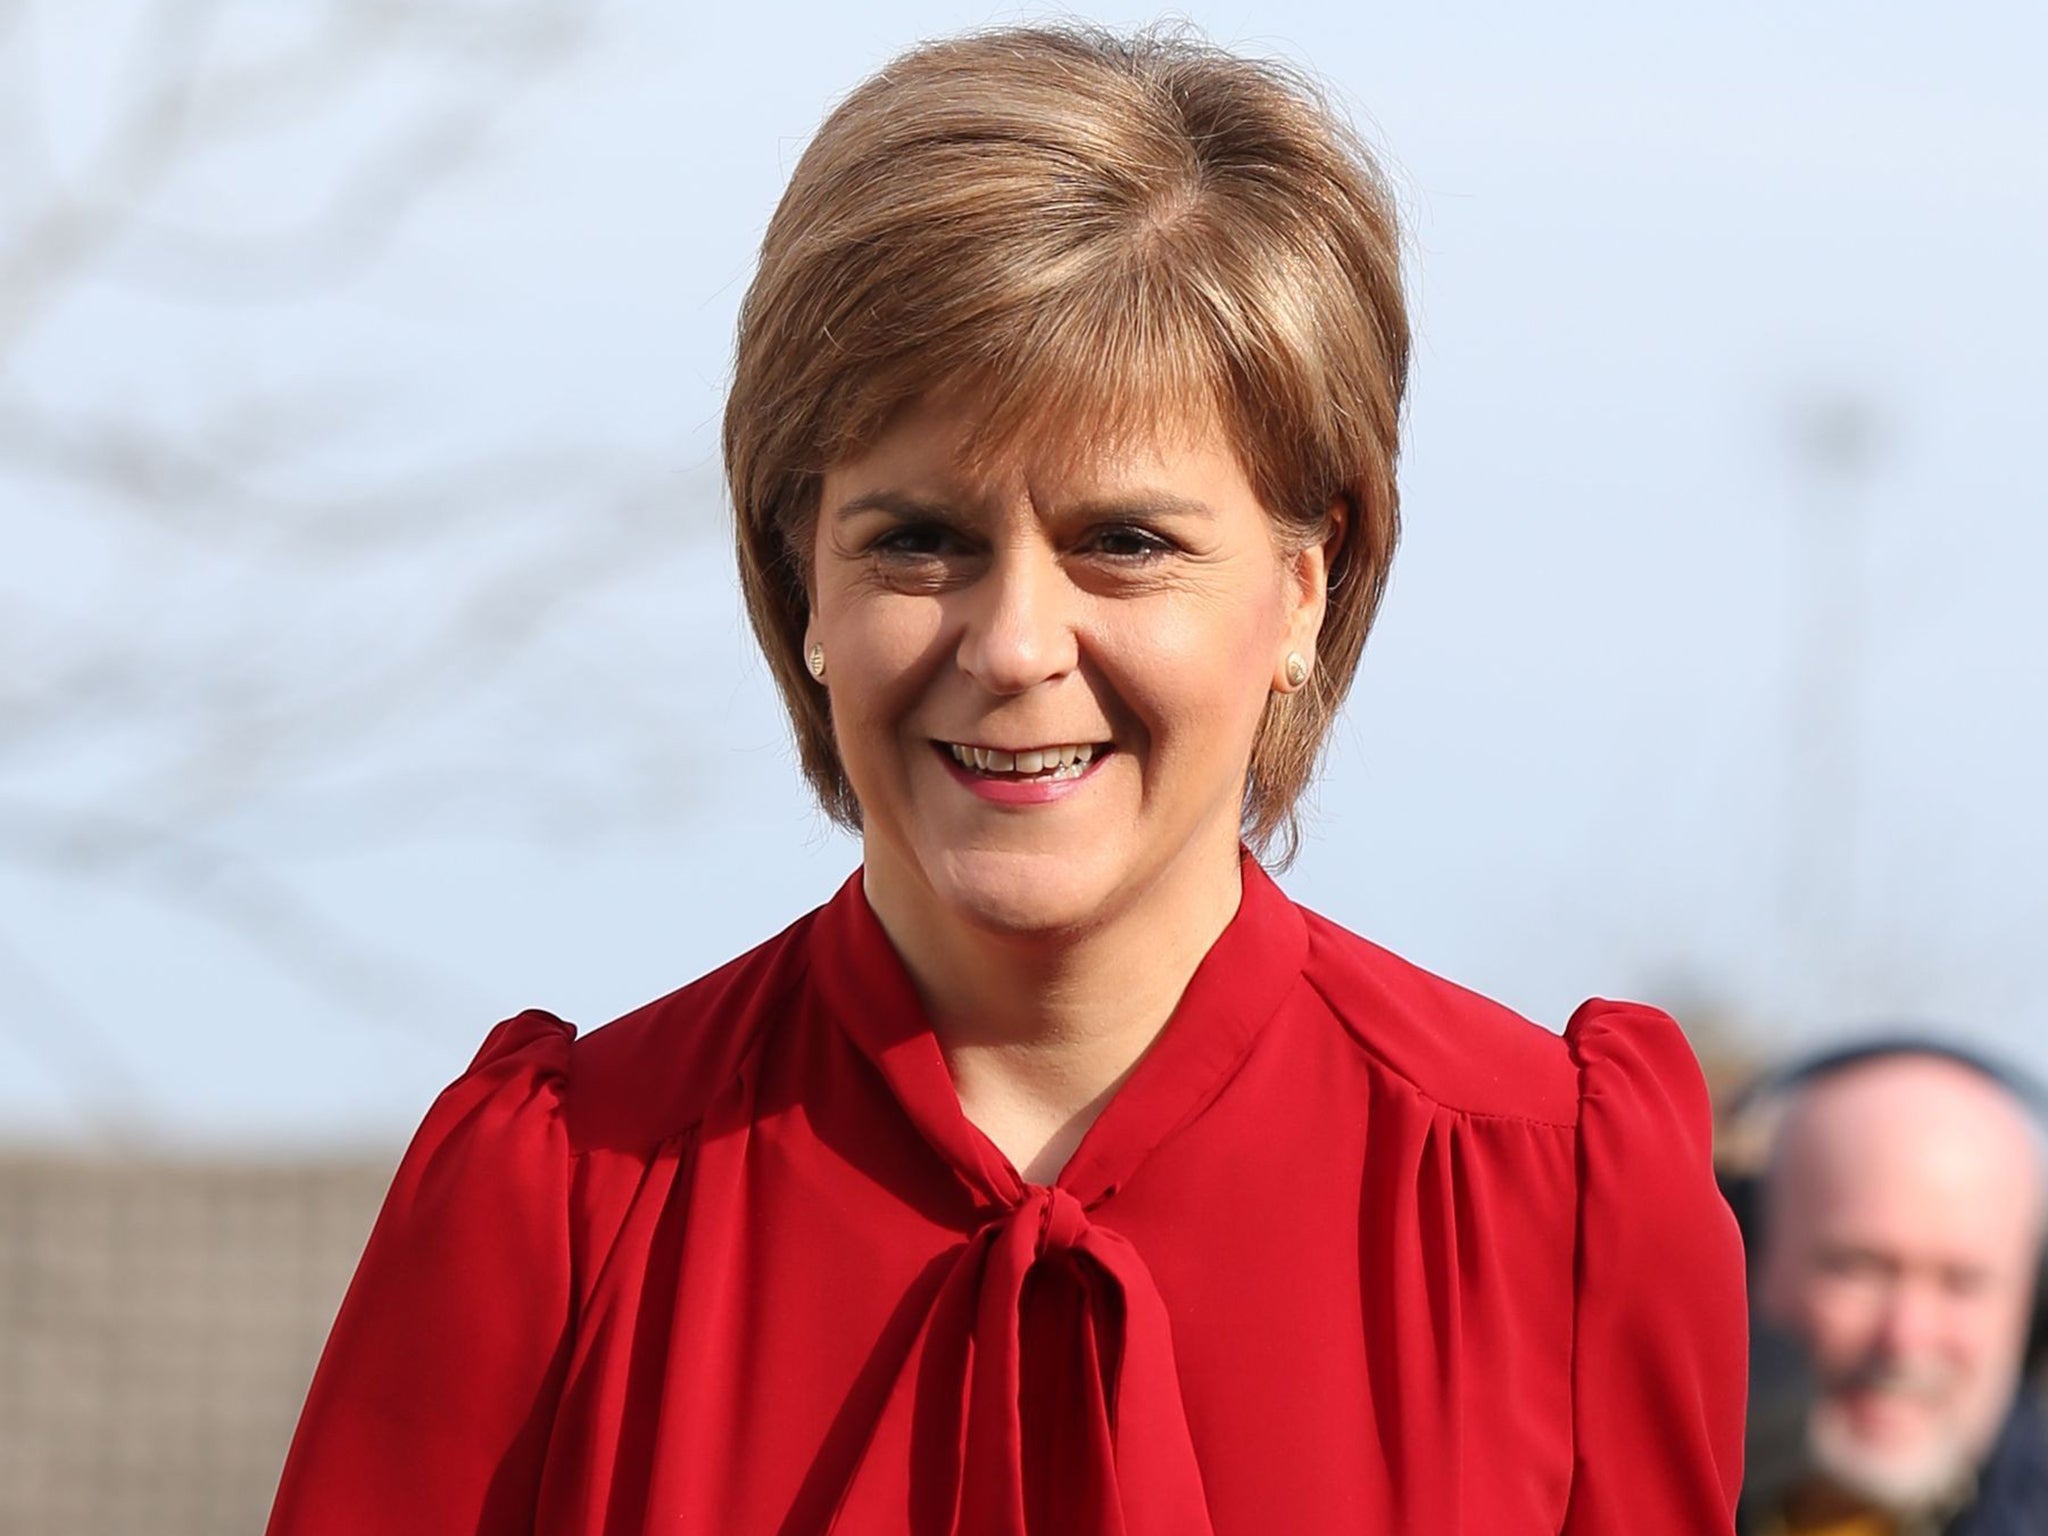 Nicola Sturgeon dismissed Labour's manifesto as proof of more spending cuts for Scotland.